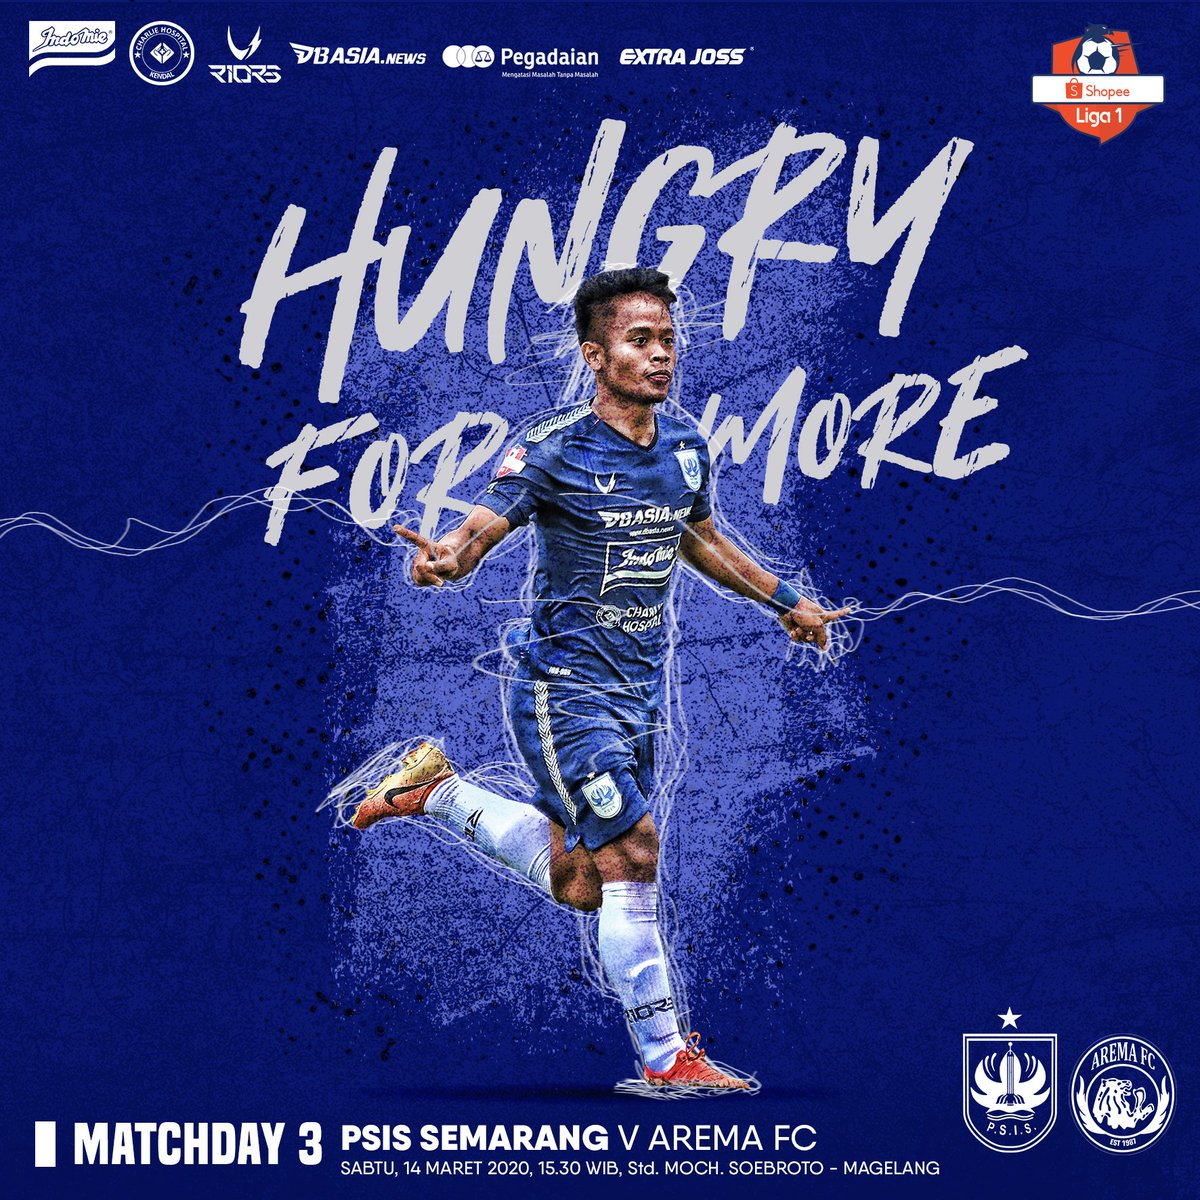 The big battle awaits, and we just #HungryForMore ⚔️
Umak iso sam, YOH ISO YOH!!! 🔥🔥🔵🔵

💥 Shopee Liga 1 2020 #Matchday 3 💥
PSIS Semarang 🆚 Arema FC
🏟️ Std. Moch. Soebroto, Magelang
🗓️ Sabtu, 14 Maret 2020
⚽ 15.30 WIB
📺 Live Indosiar

#PSIS #YohIsoYoh #ShopeeLiga1